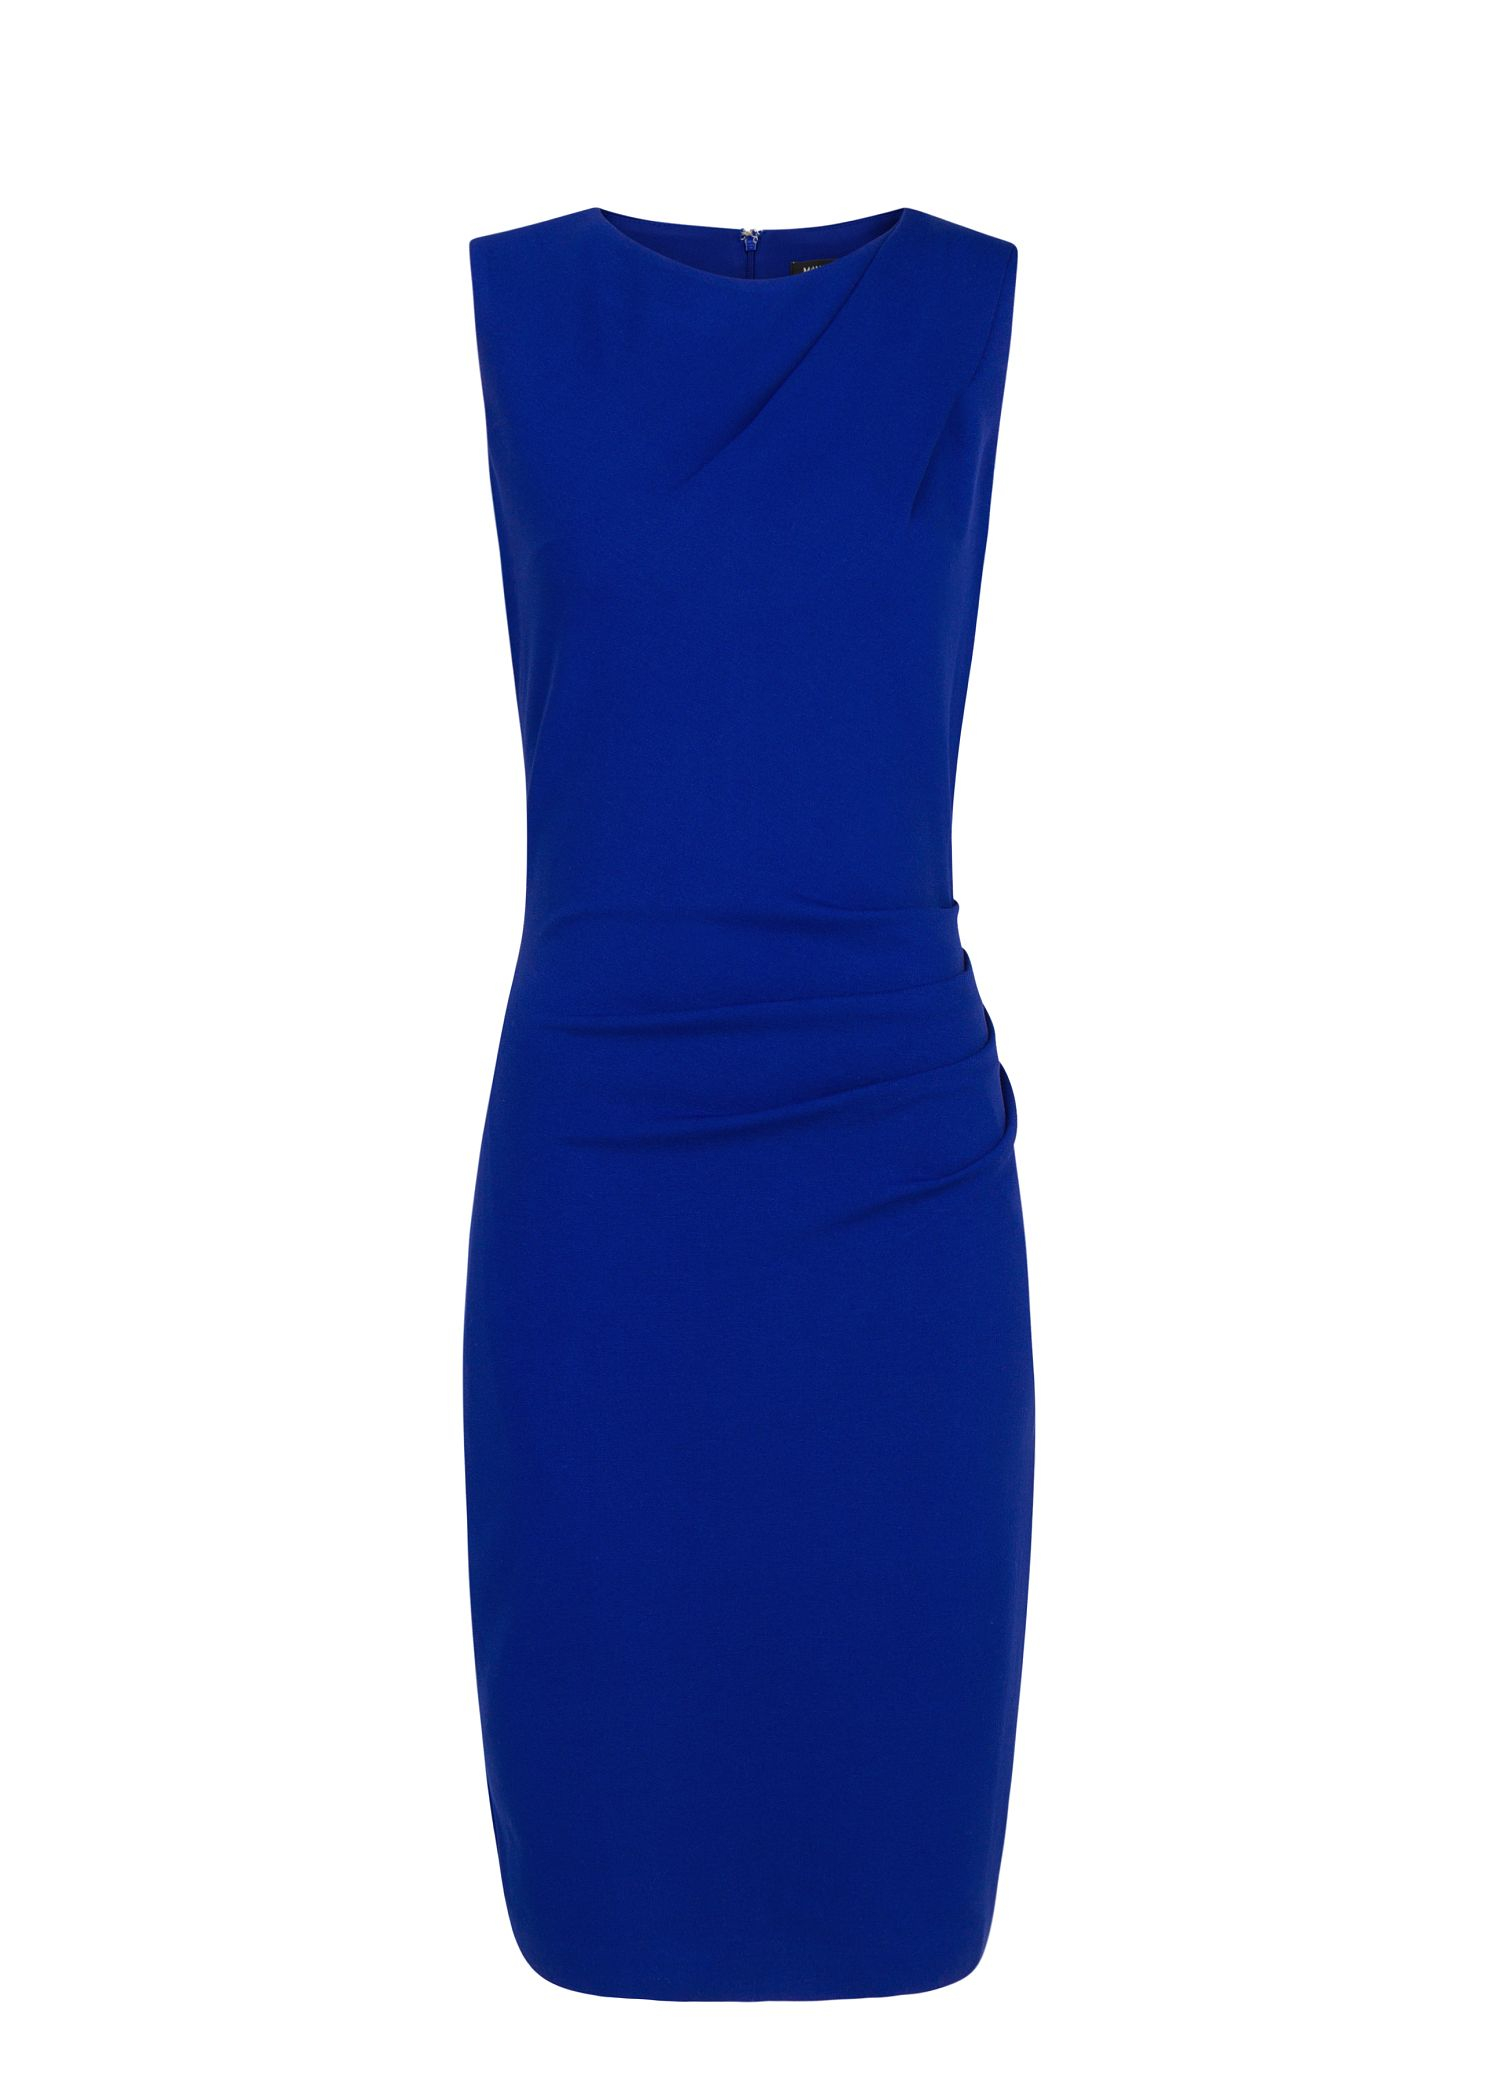 Lyst - Mango Draped Dress in Blue